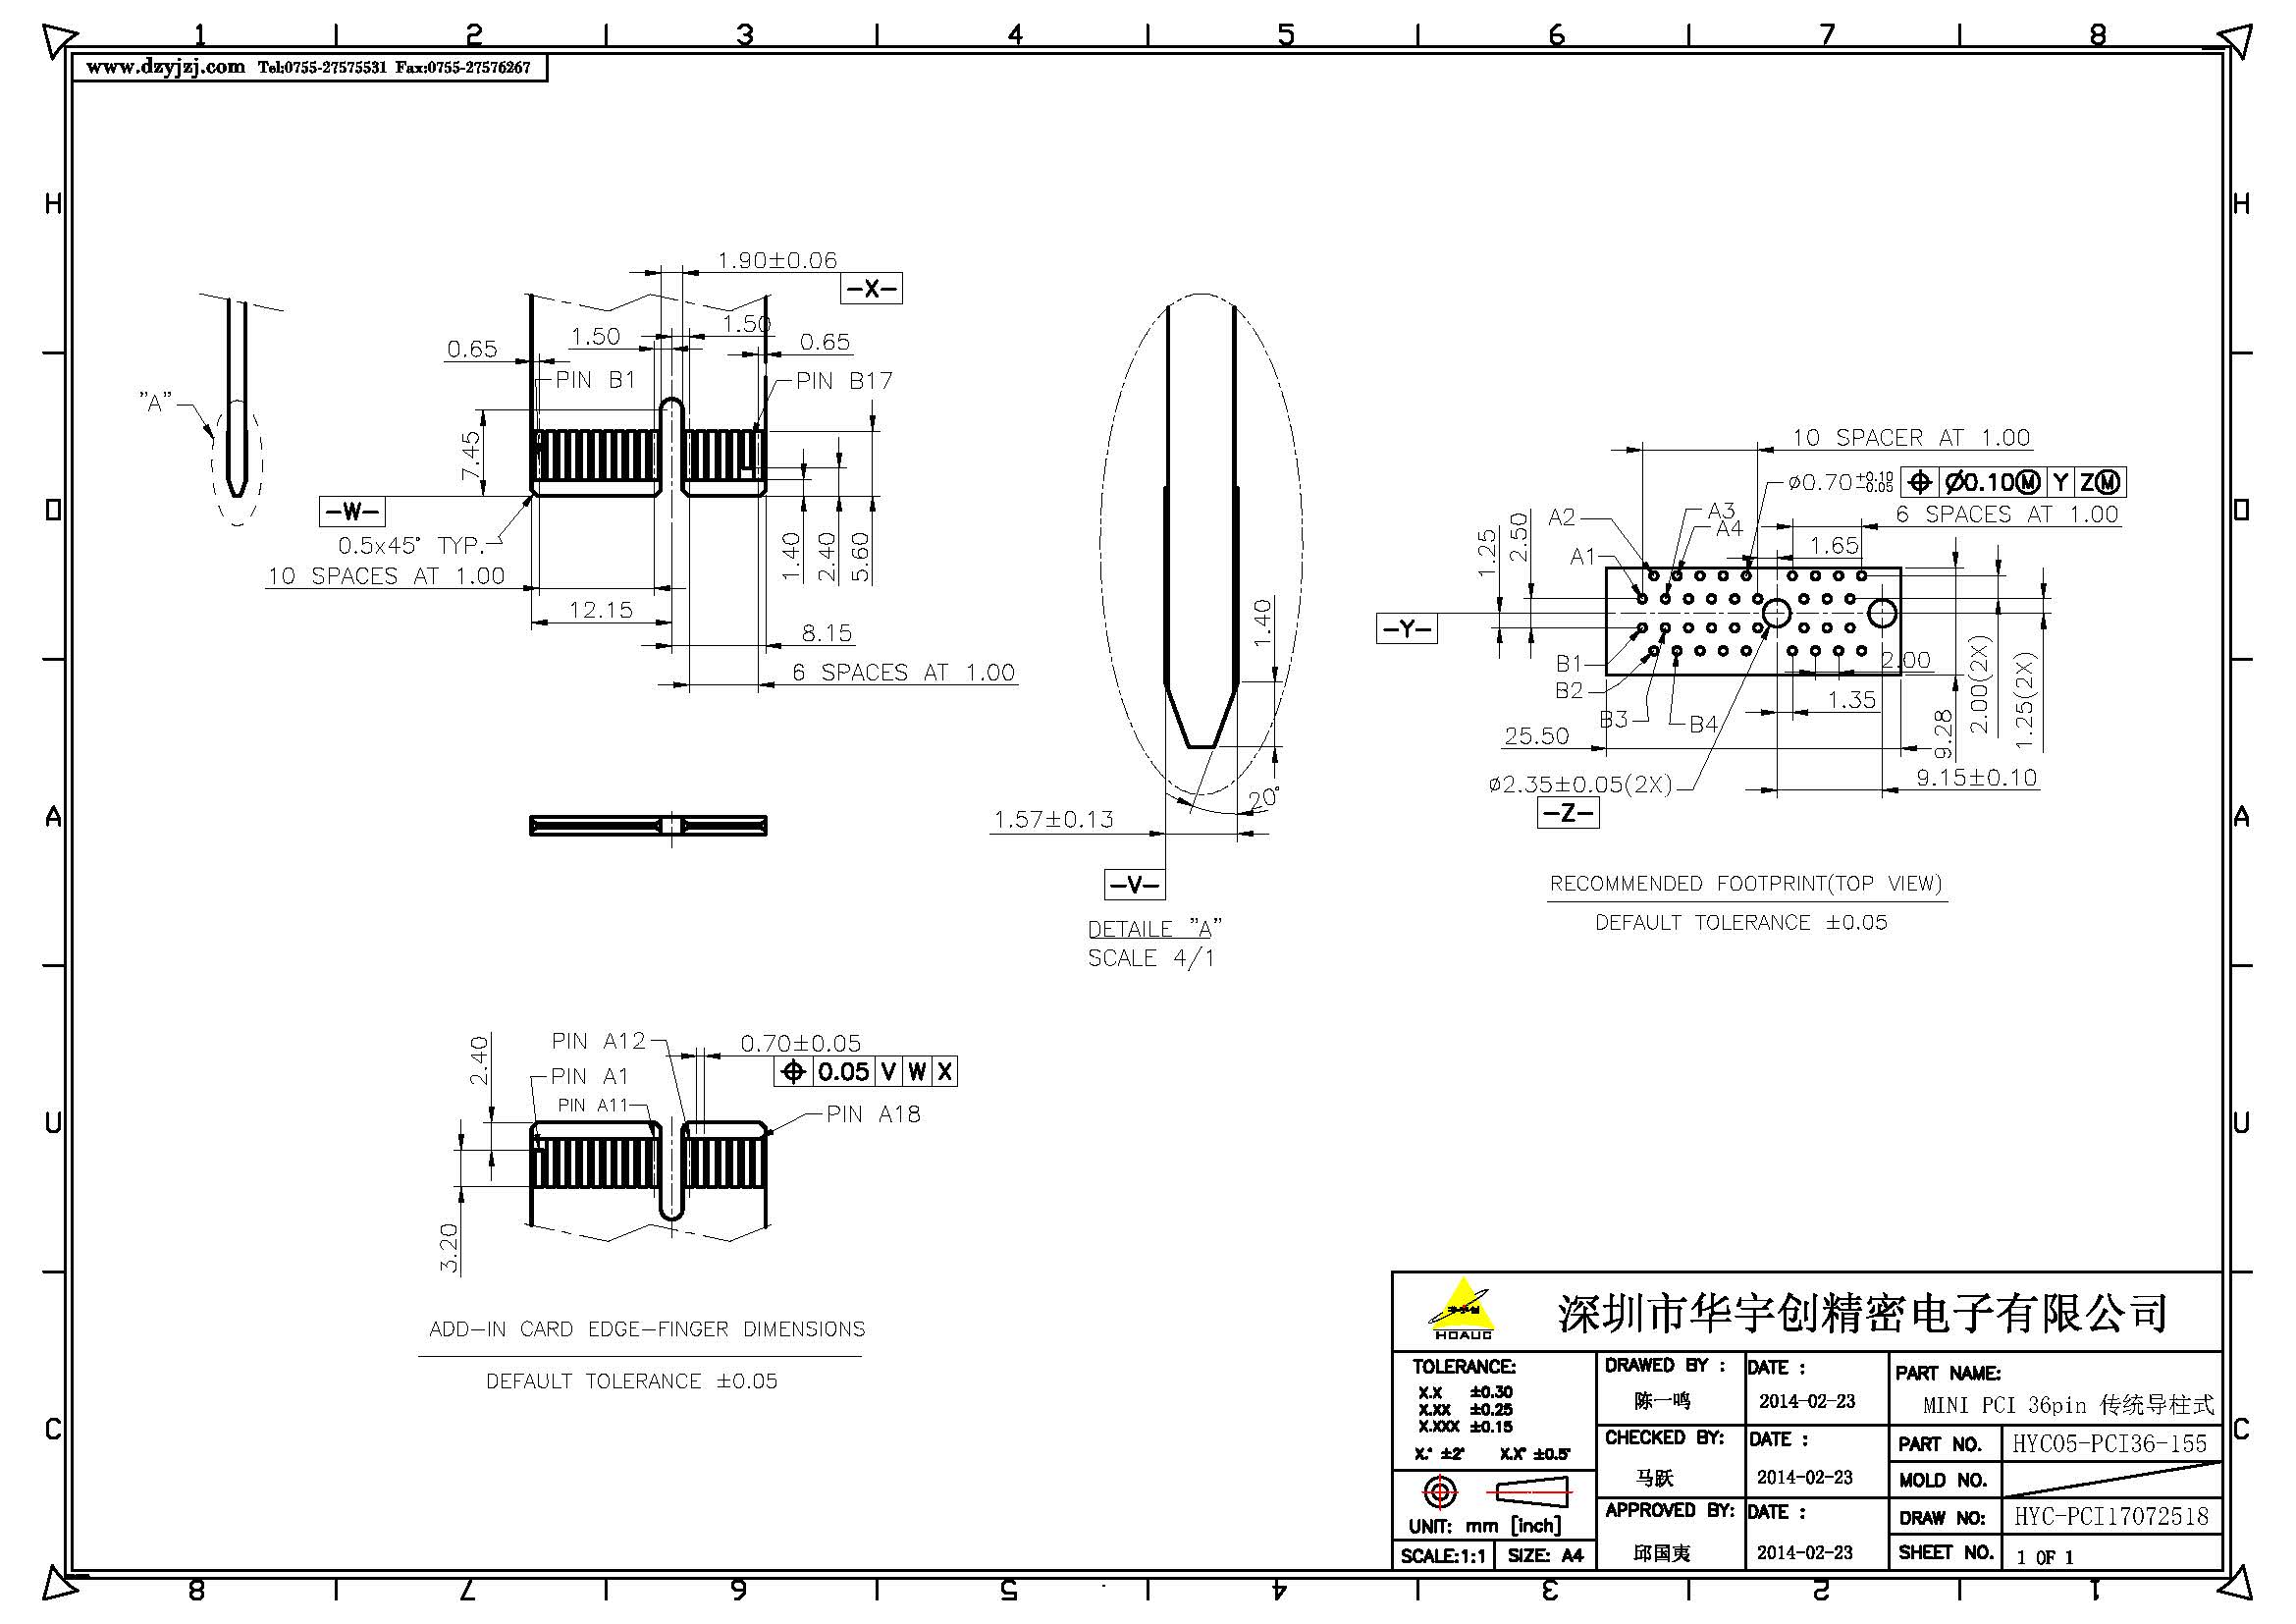 MINI PCI  36pin 传统导柱式产品图_页面_2.jpg